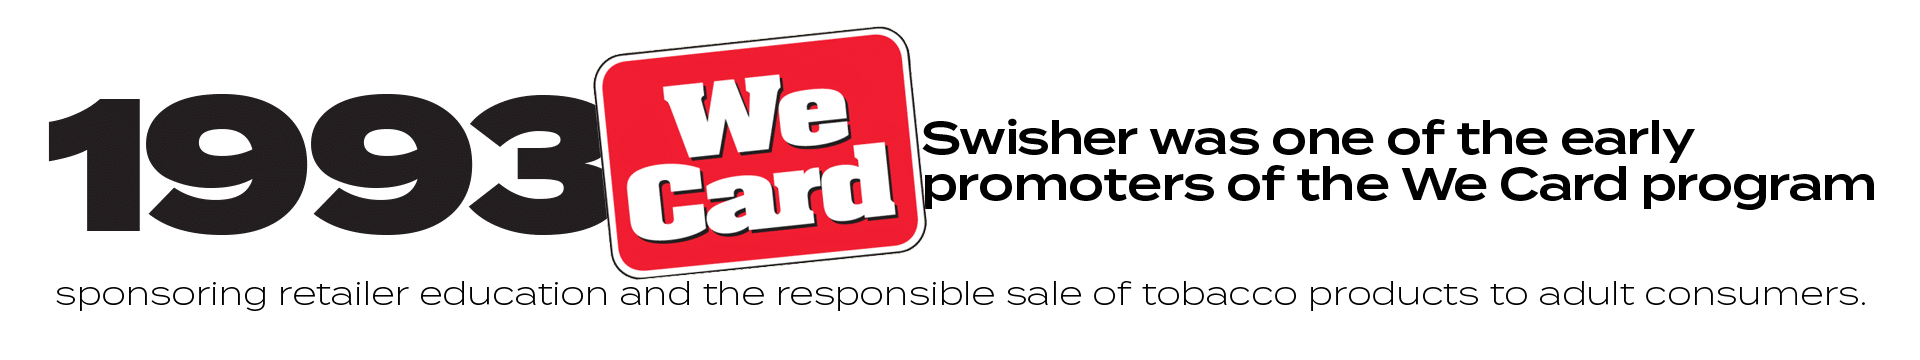 We Card Logo